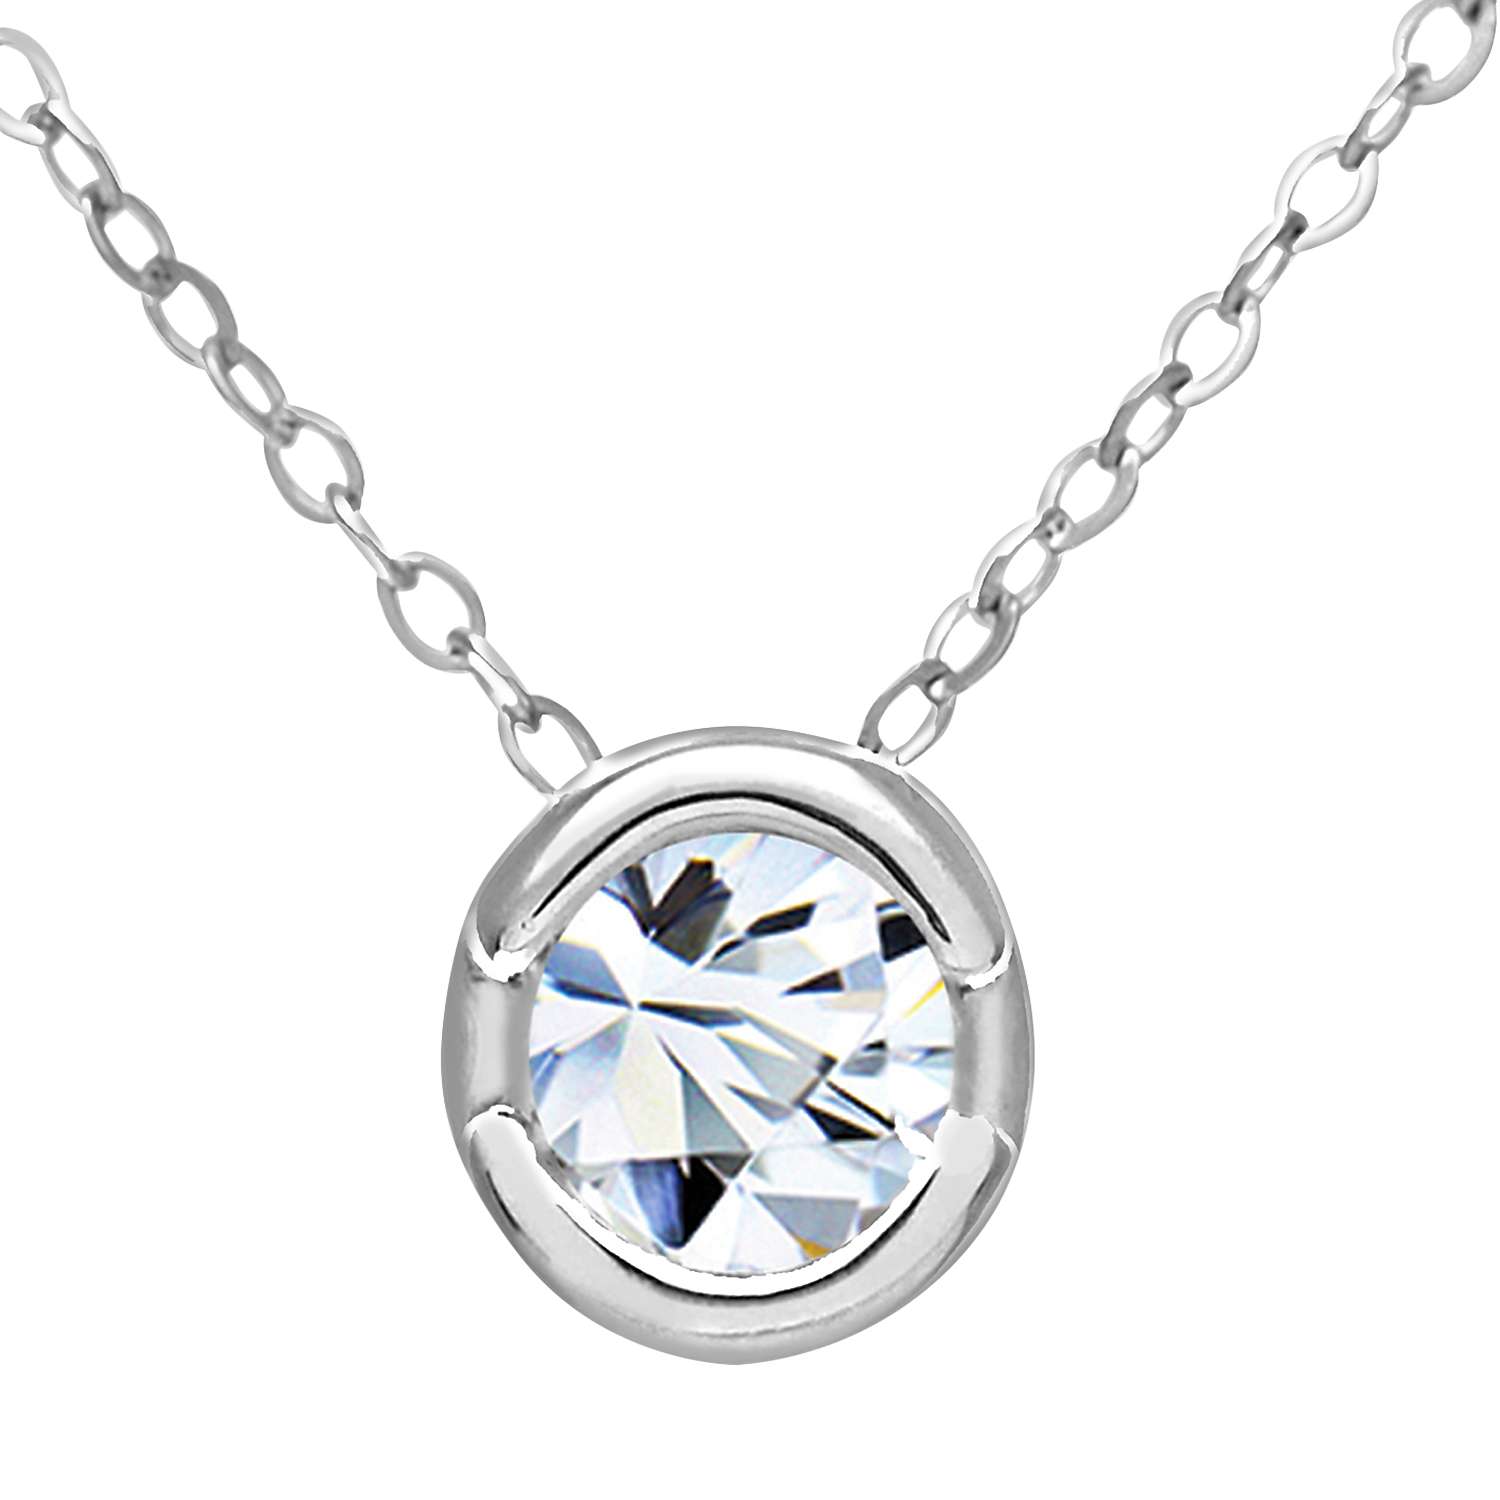 Buy Mogul 9ct White Gold Diamond Round Pendant Necklace, 0.25ct Online at johnlewis.com